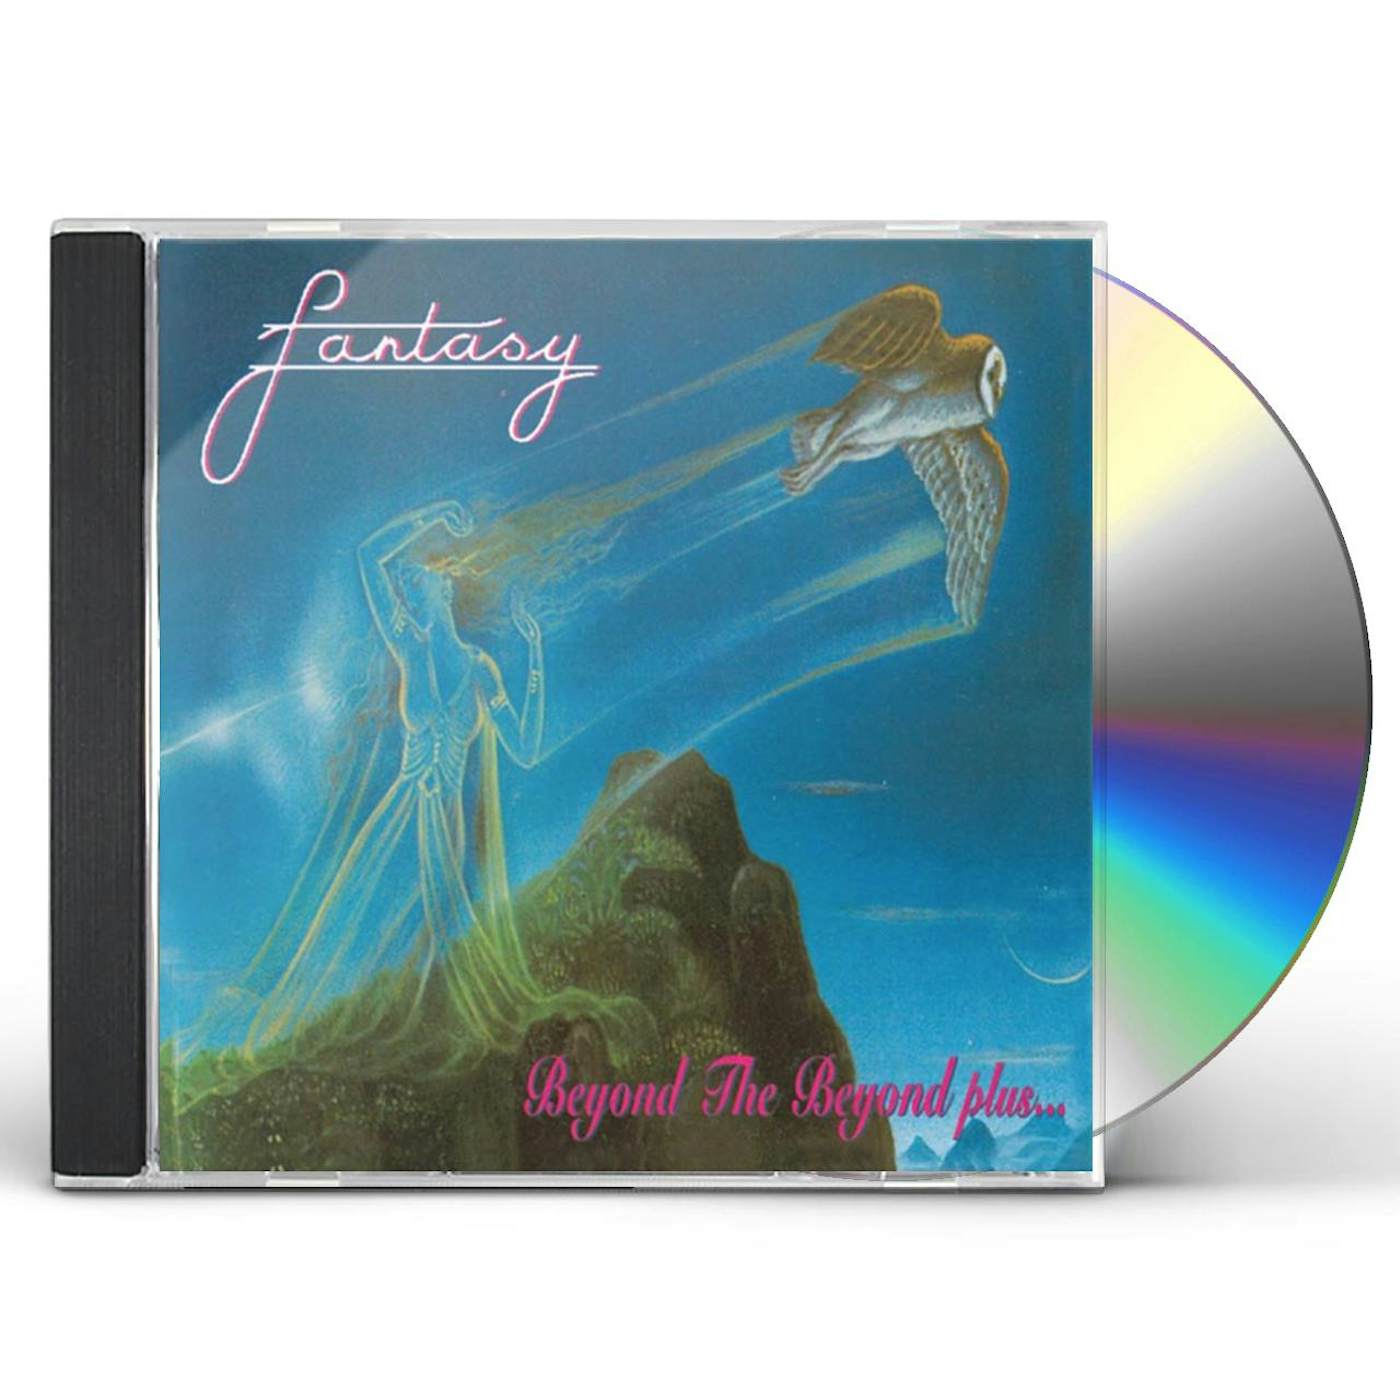 Fantasy BEYOND THE BEYOND PLUS CD